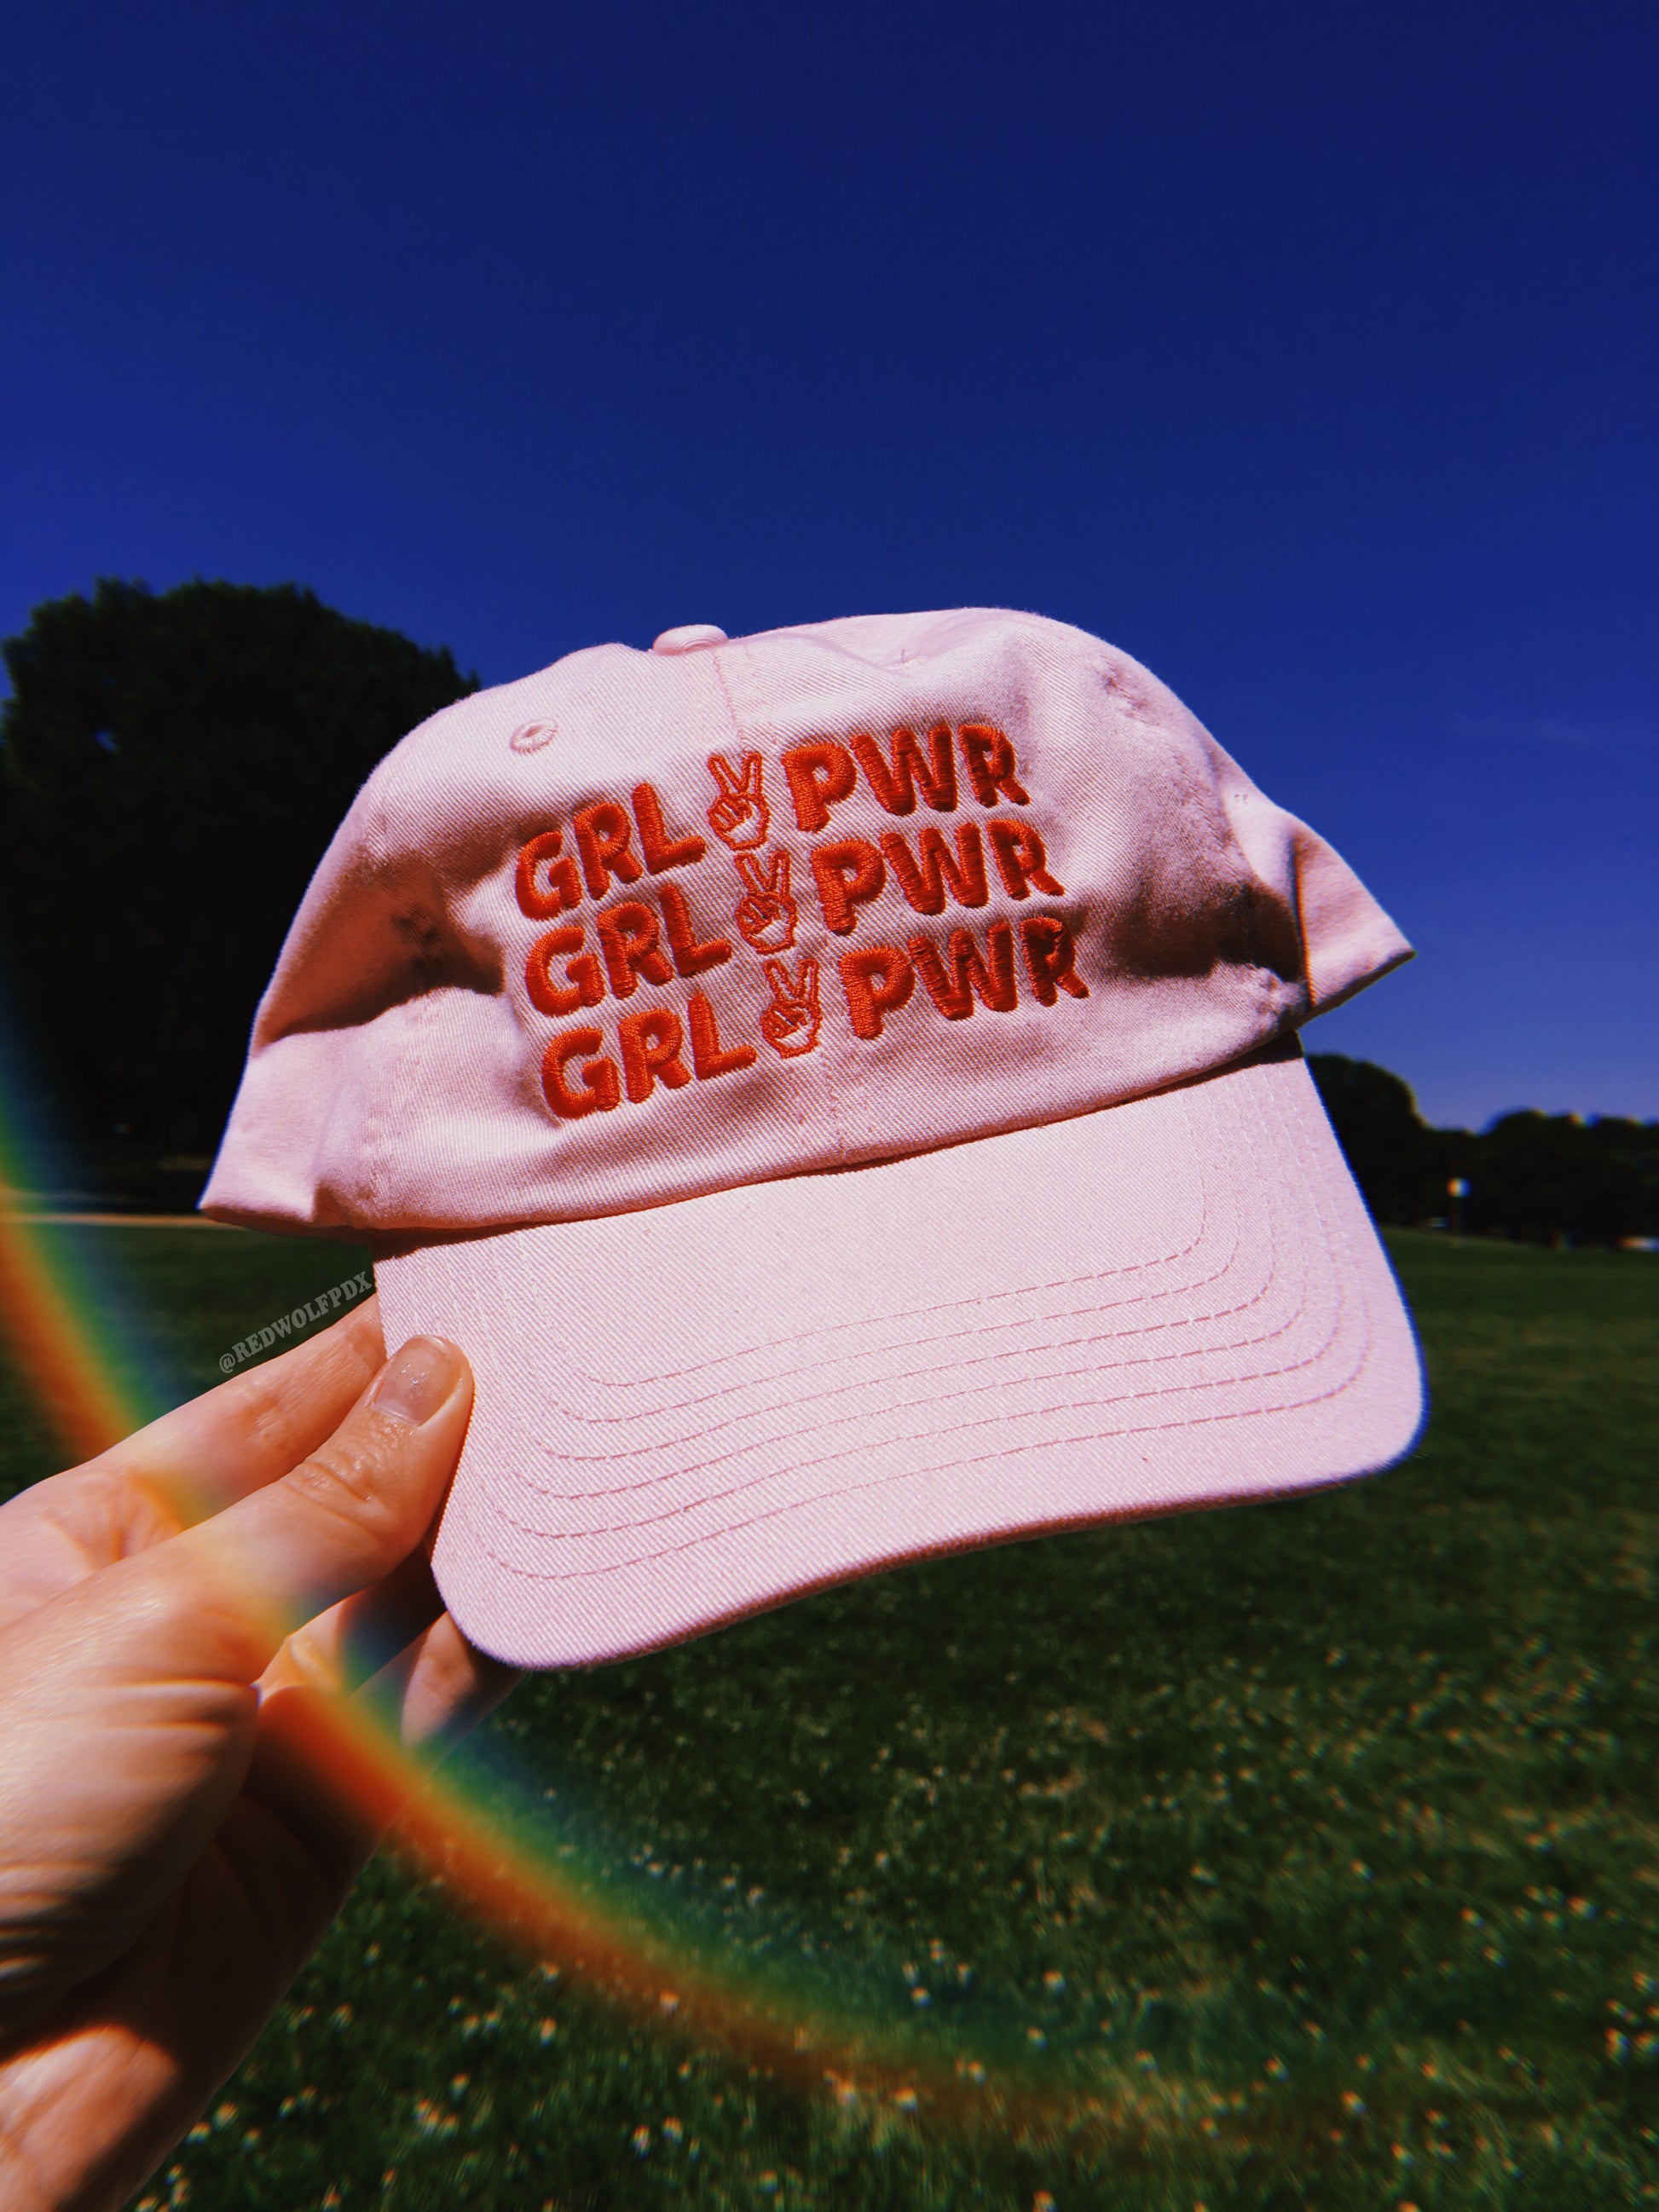  hat - GIRL POWER Baseball Cap - Light Pink - REDWOLF